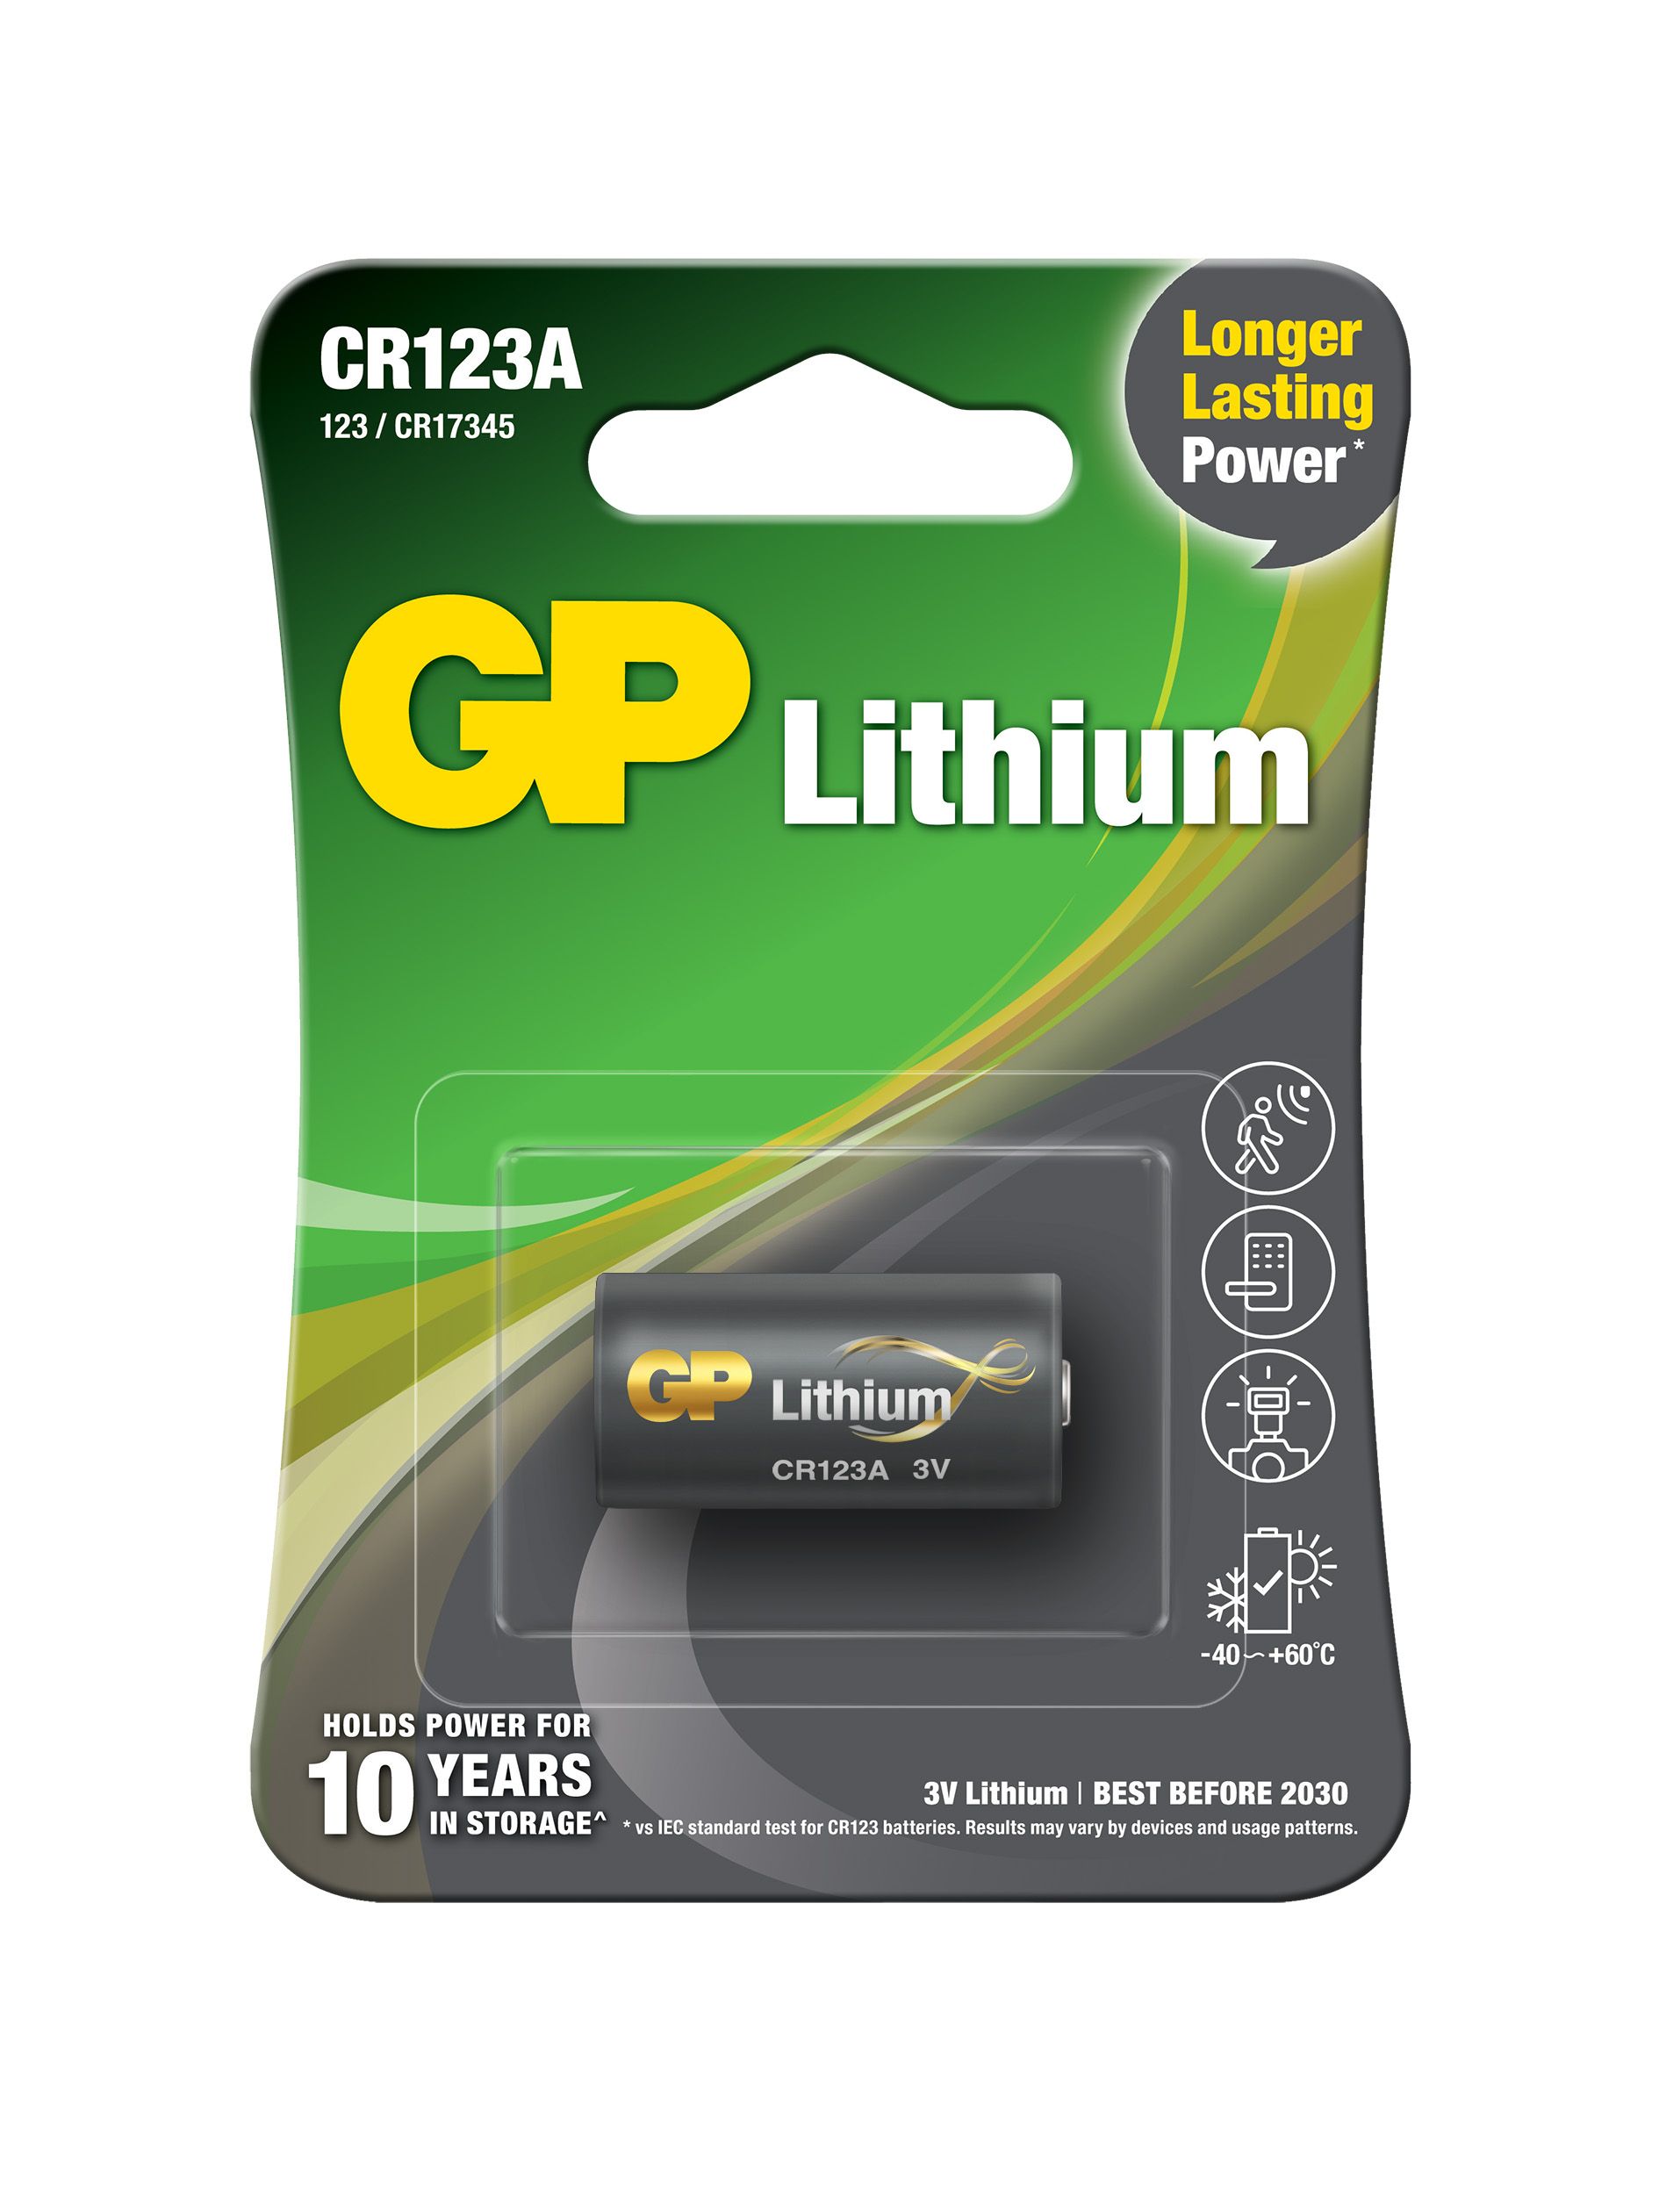 Lithium battery CR123A